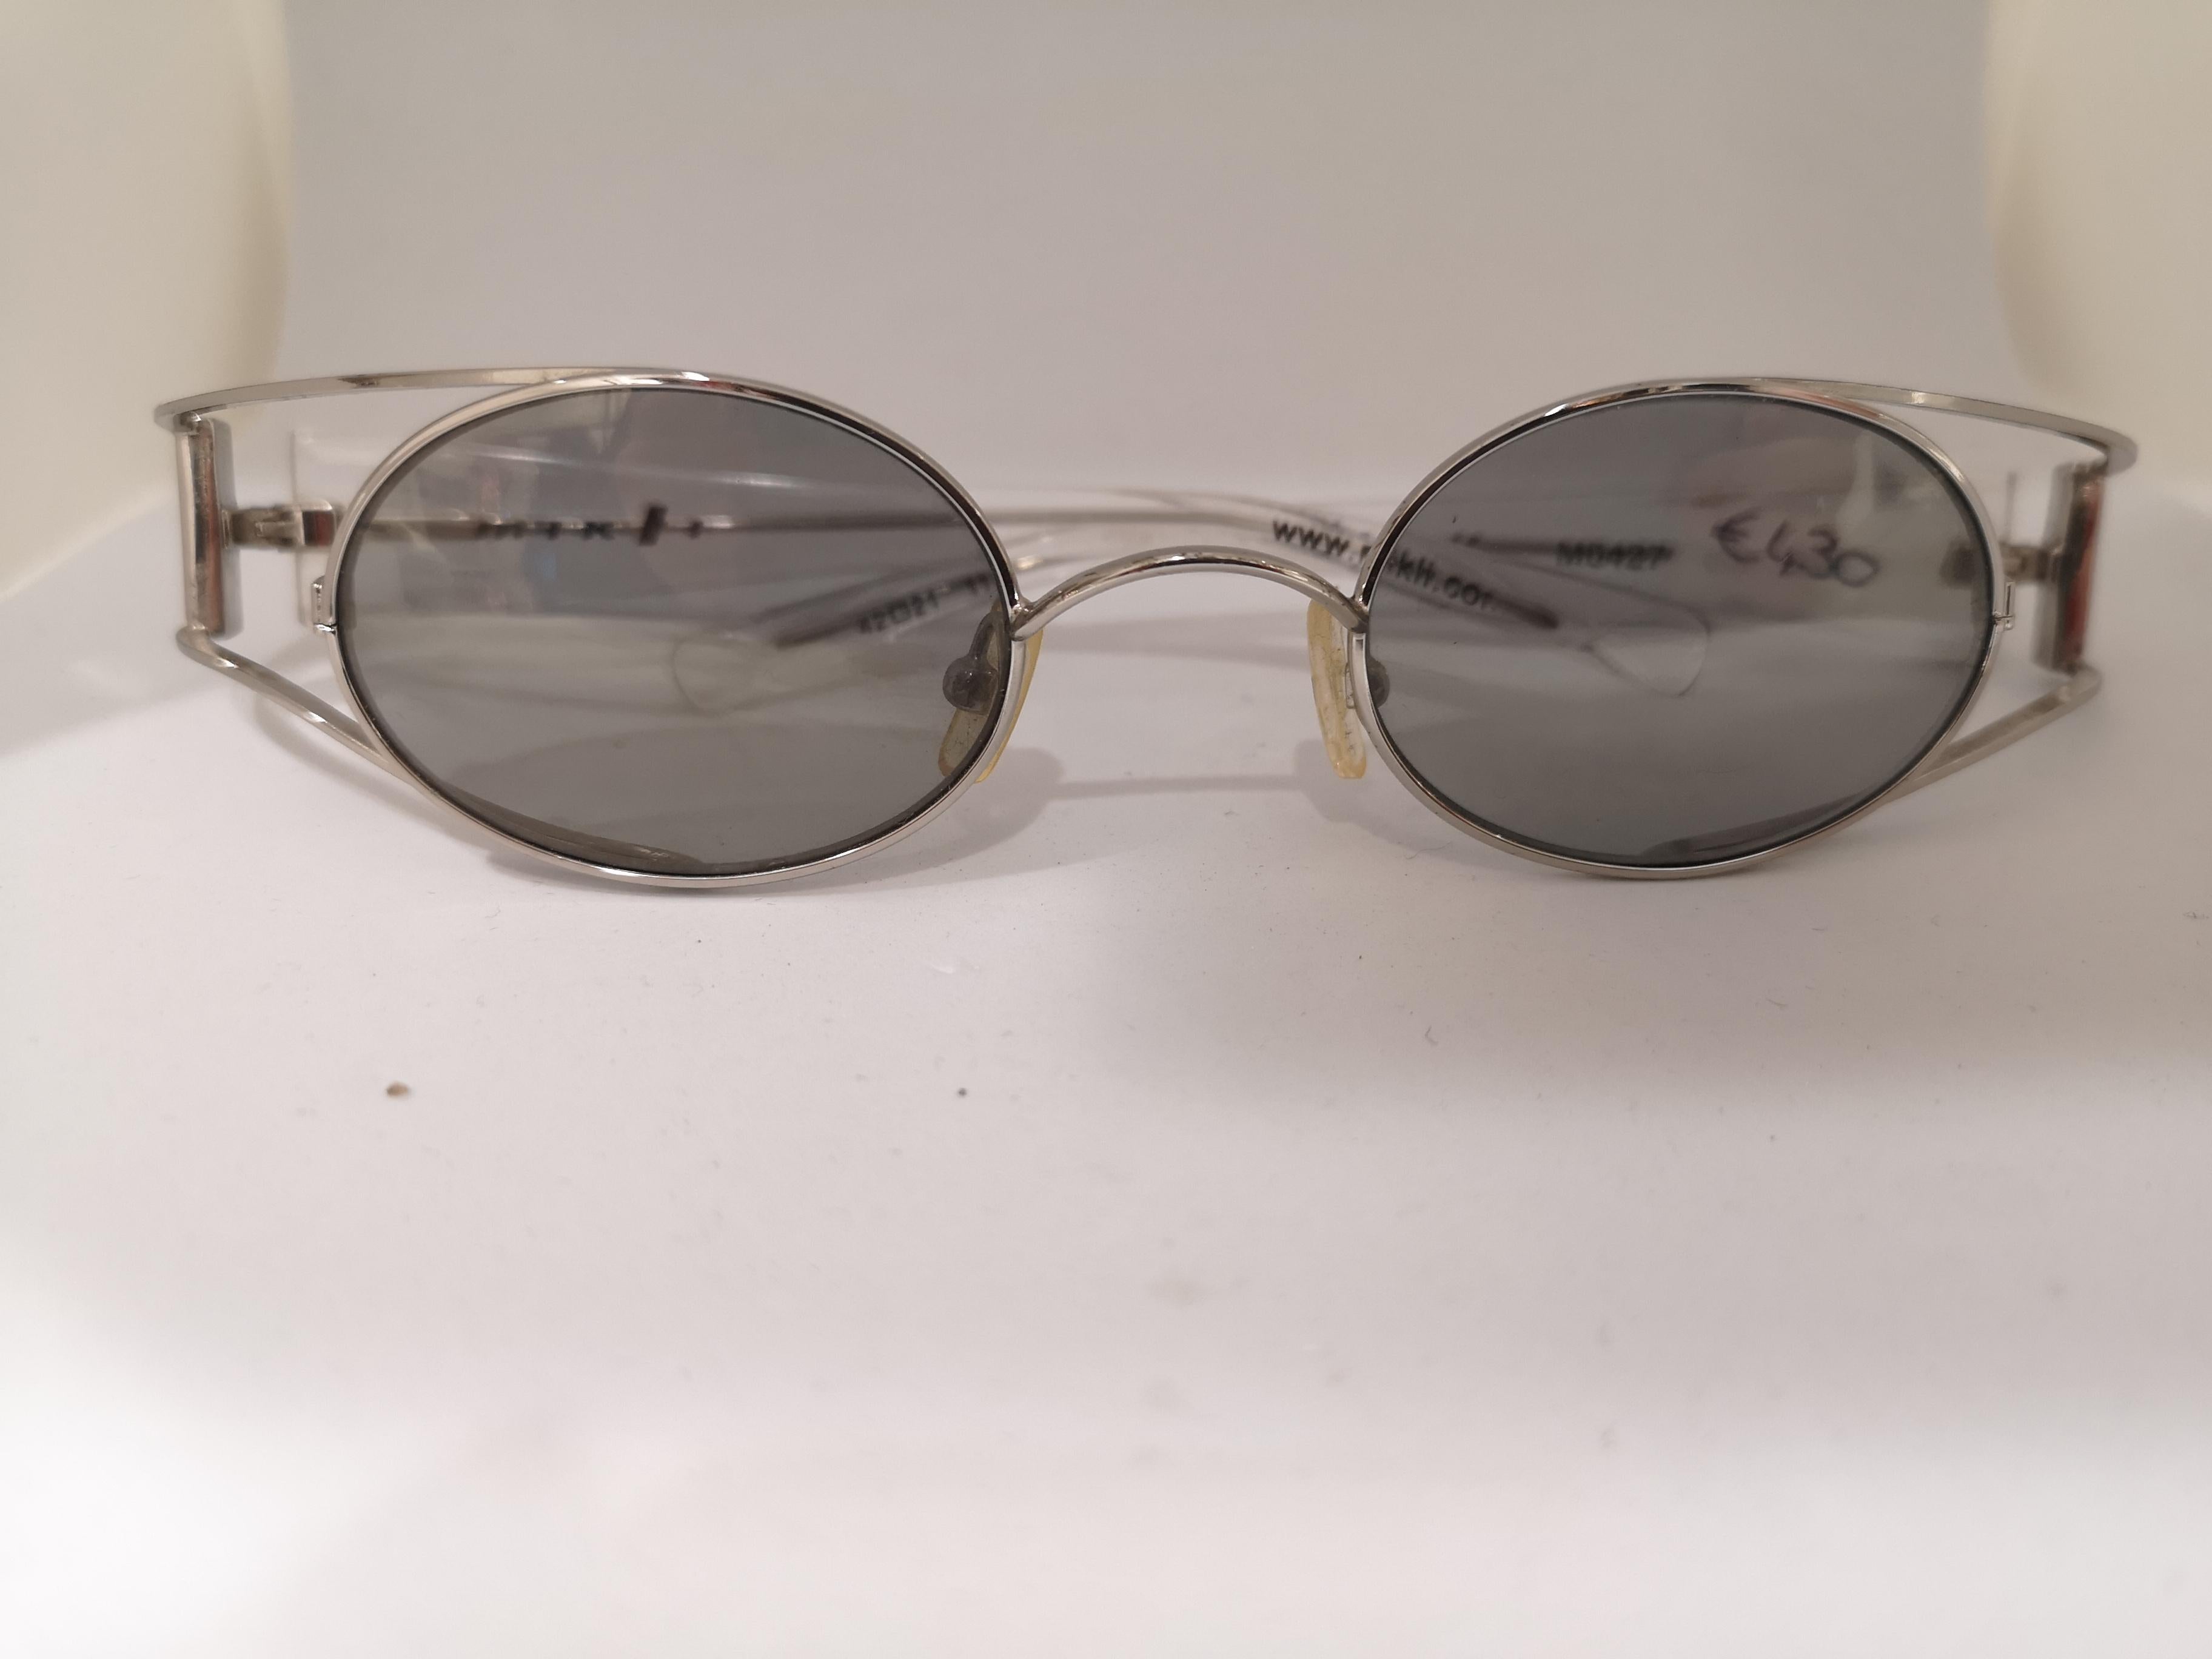 Alain Mikli paris vintage sunglasses
A vintage iconic Mikli with grey glasses
